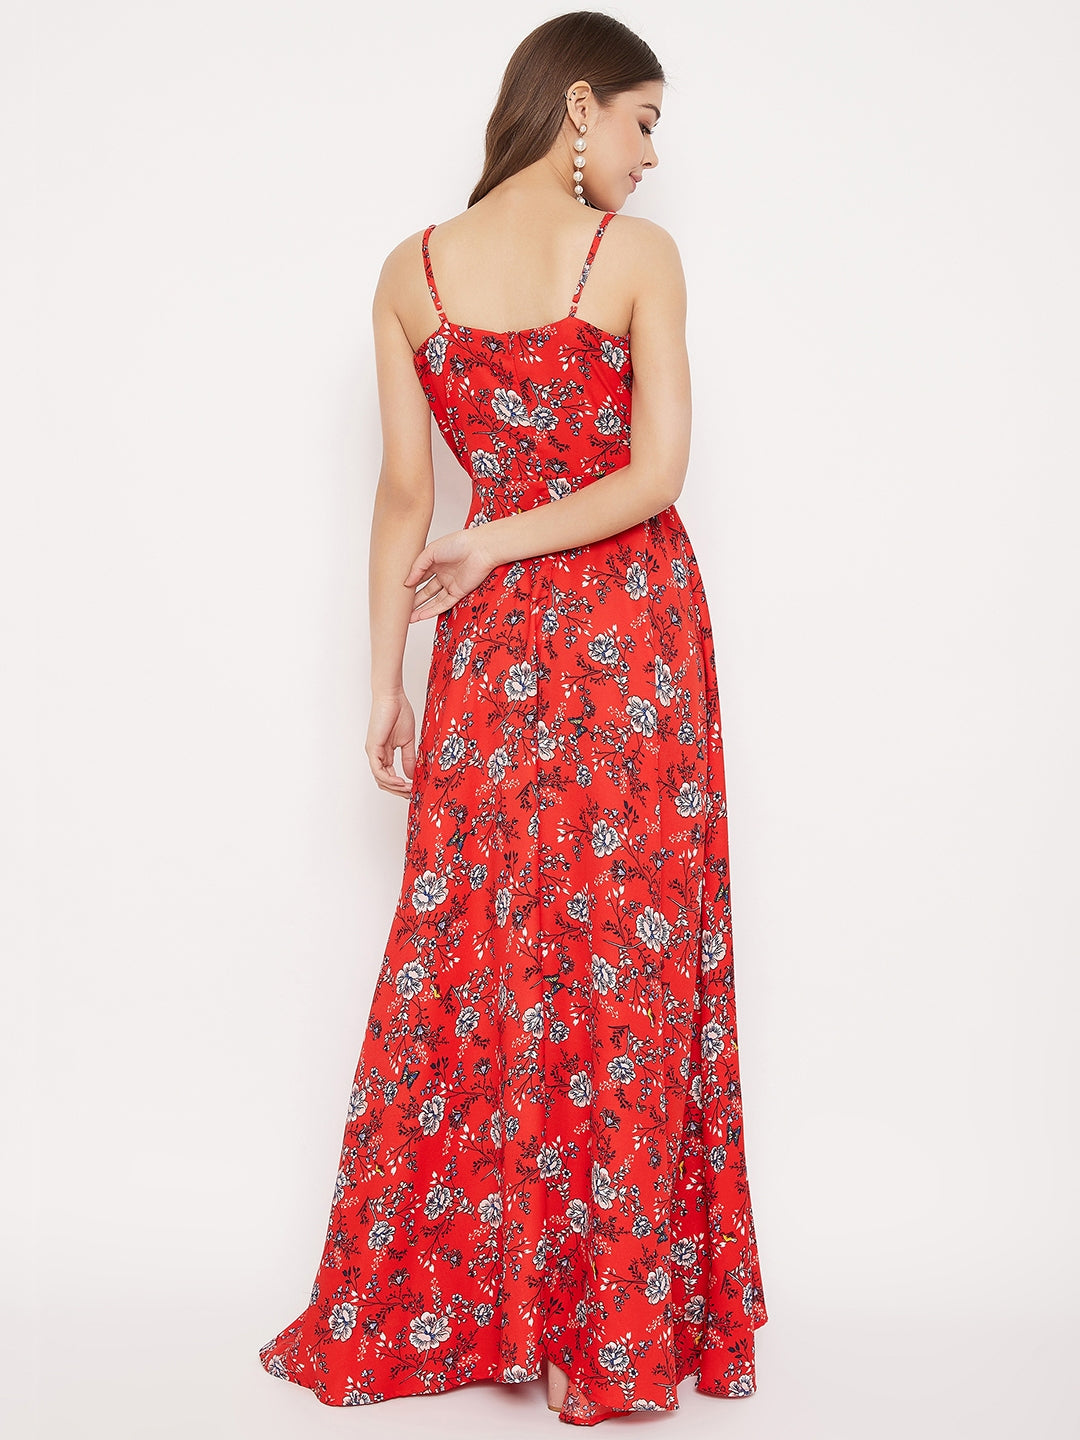 Berrylush Women Red & White Floral Printed V-Neck Thigh-High Slit Flared Maxi Dress